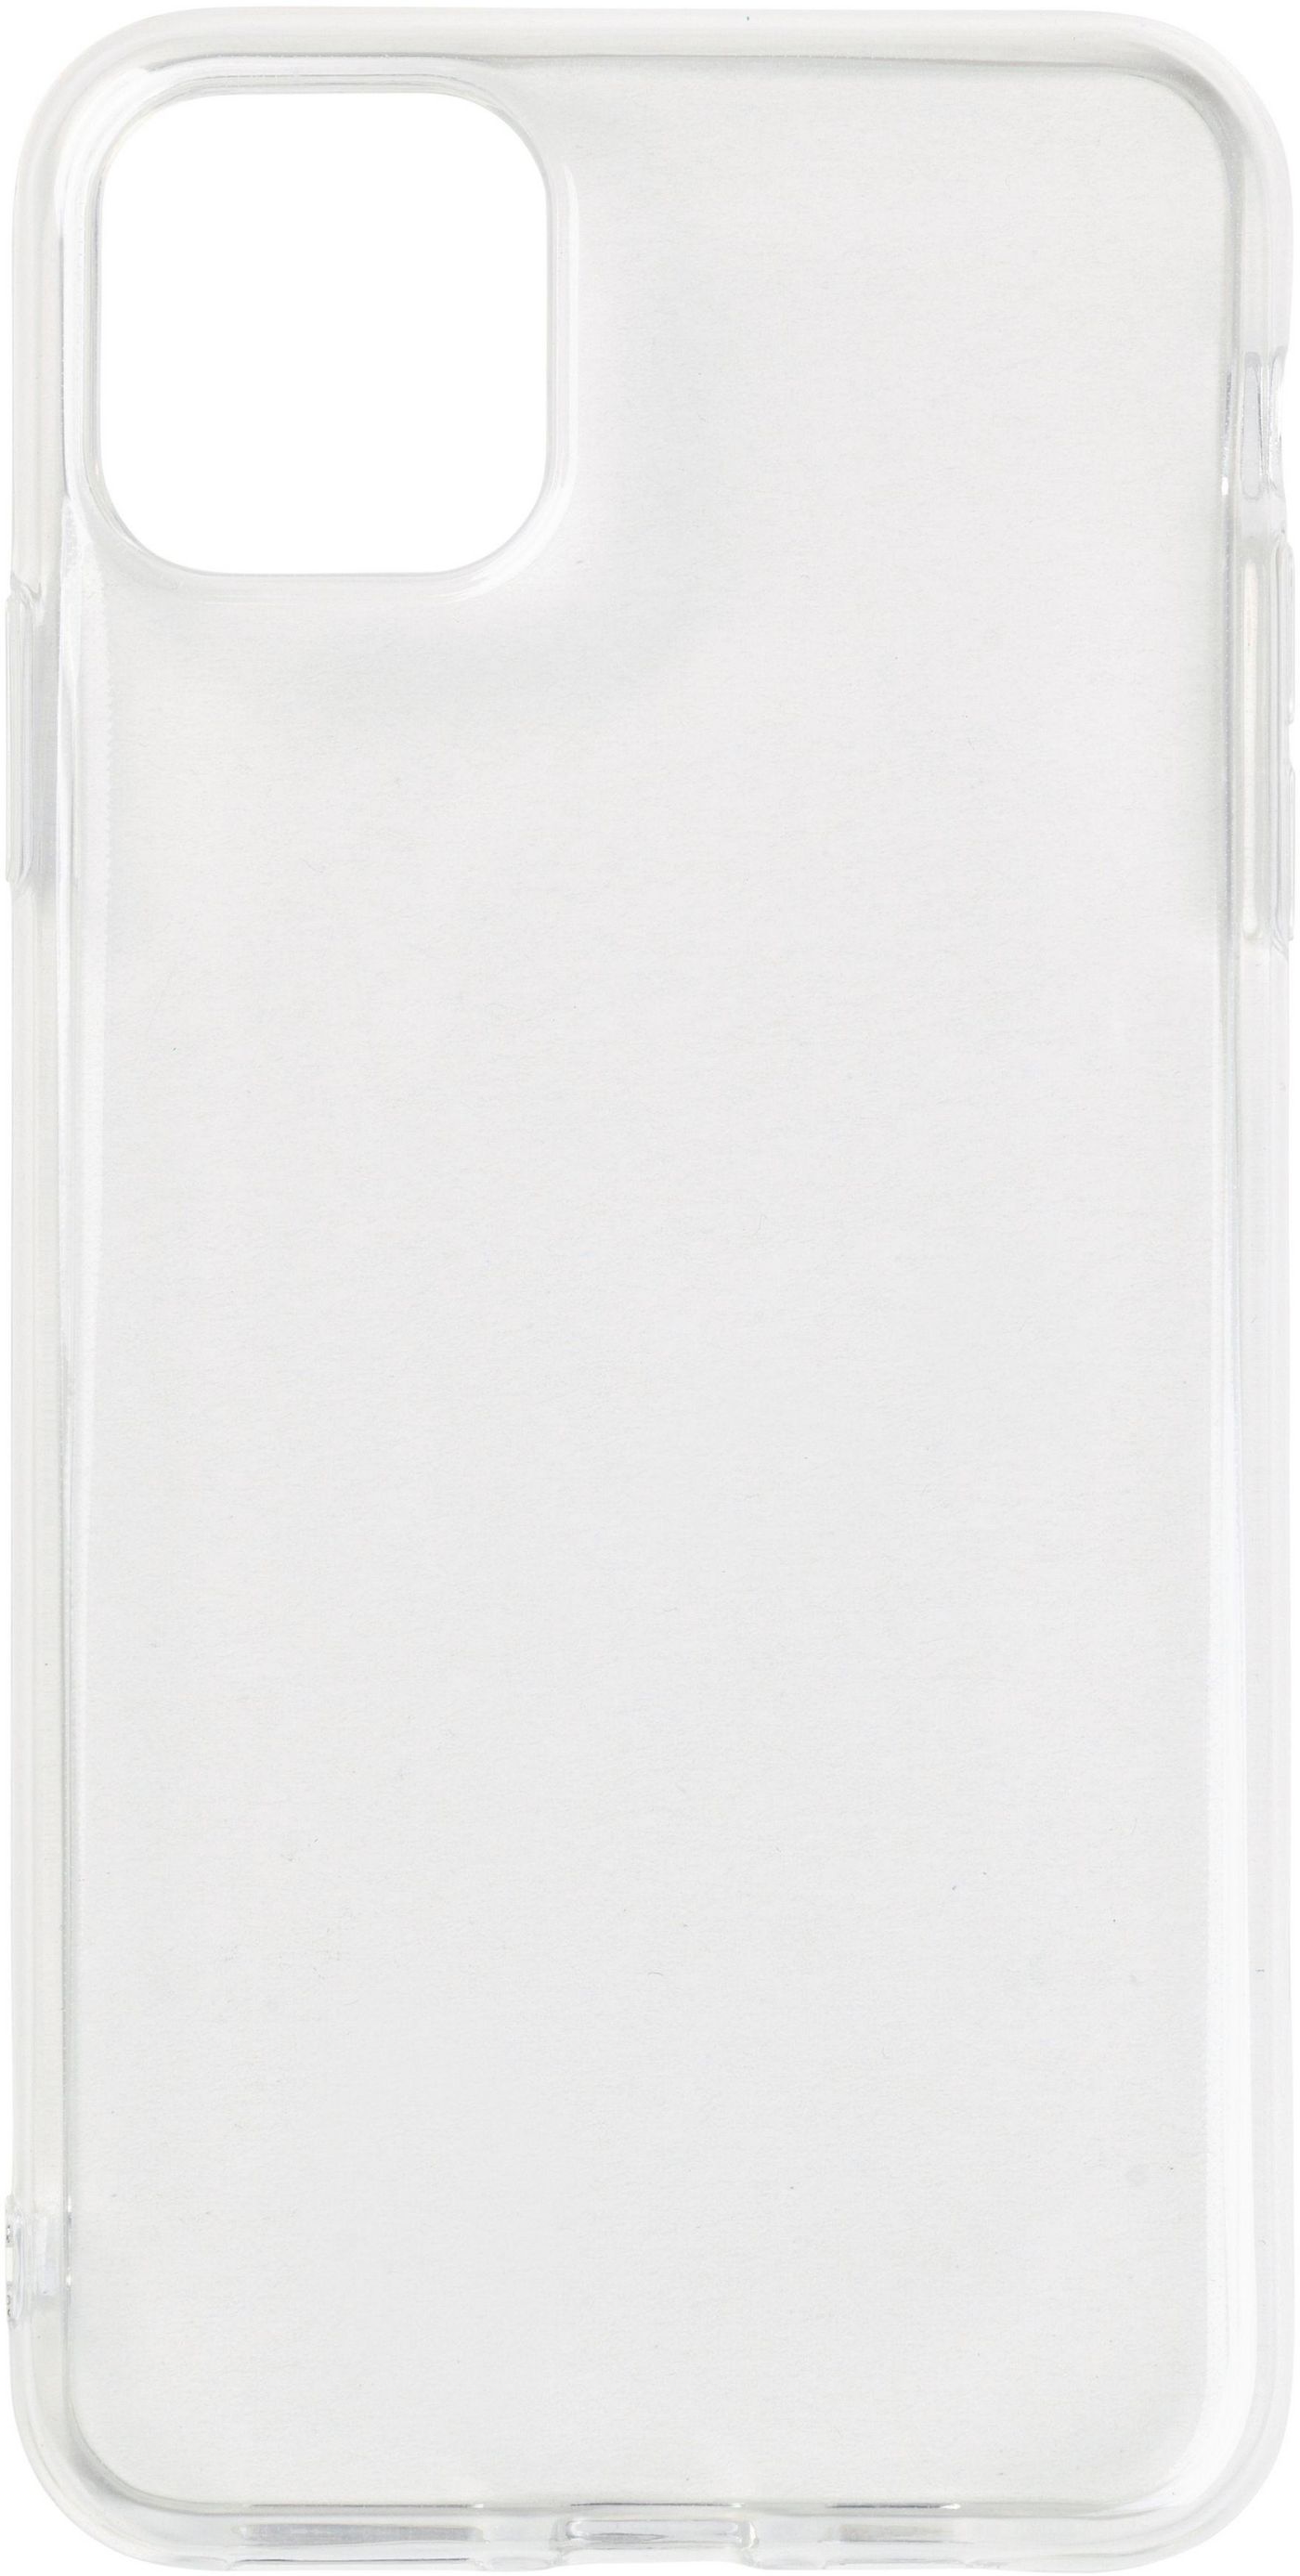 iPhone 11 Pro Max Soft Case Clear Ultra-slim